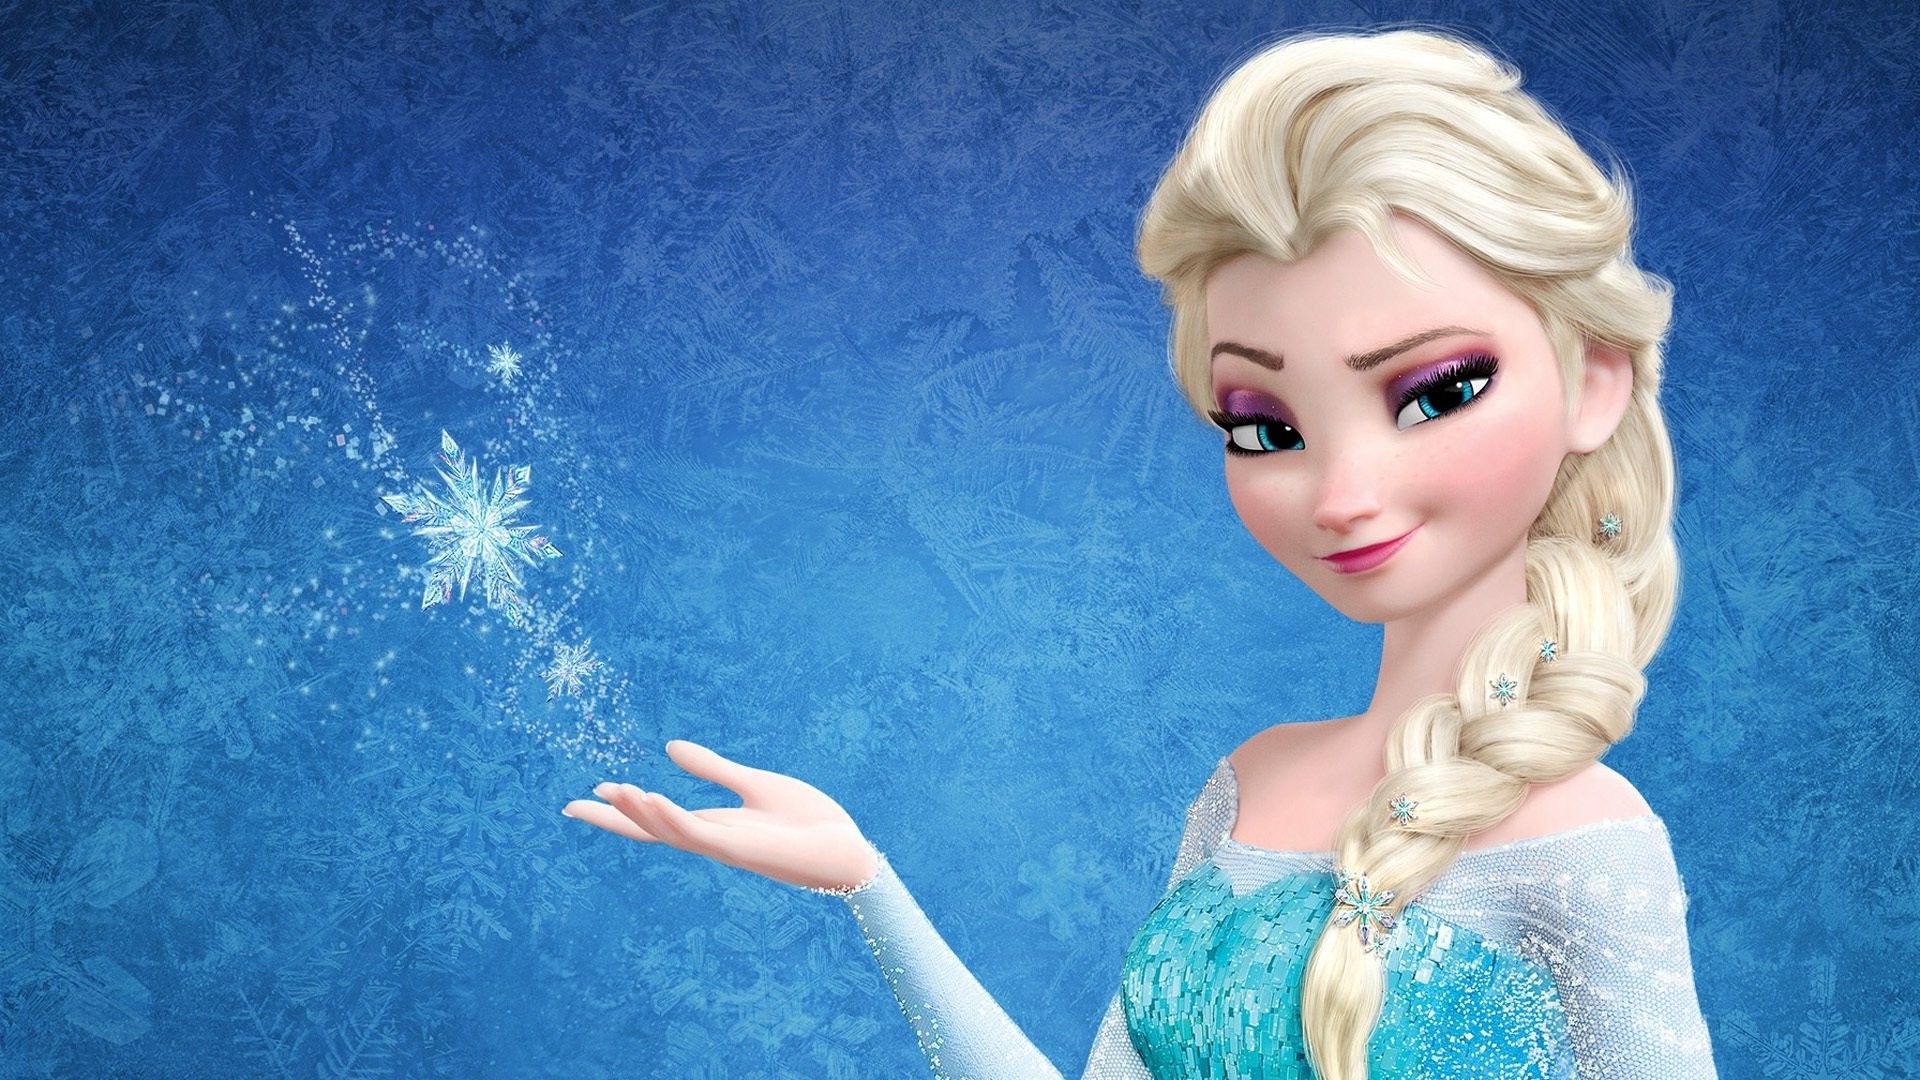 movies, Frozen (movie), Princess Elsa Wallpaper